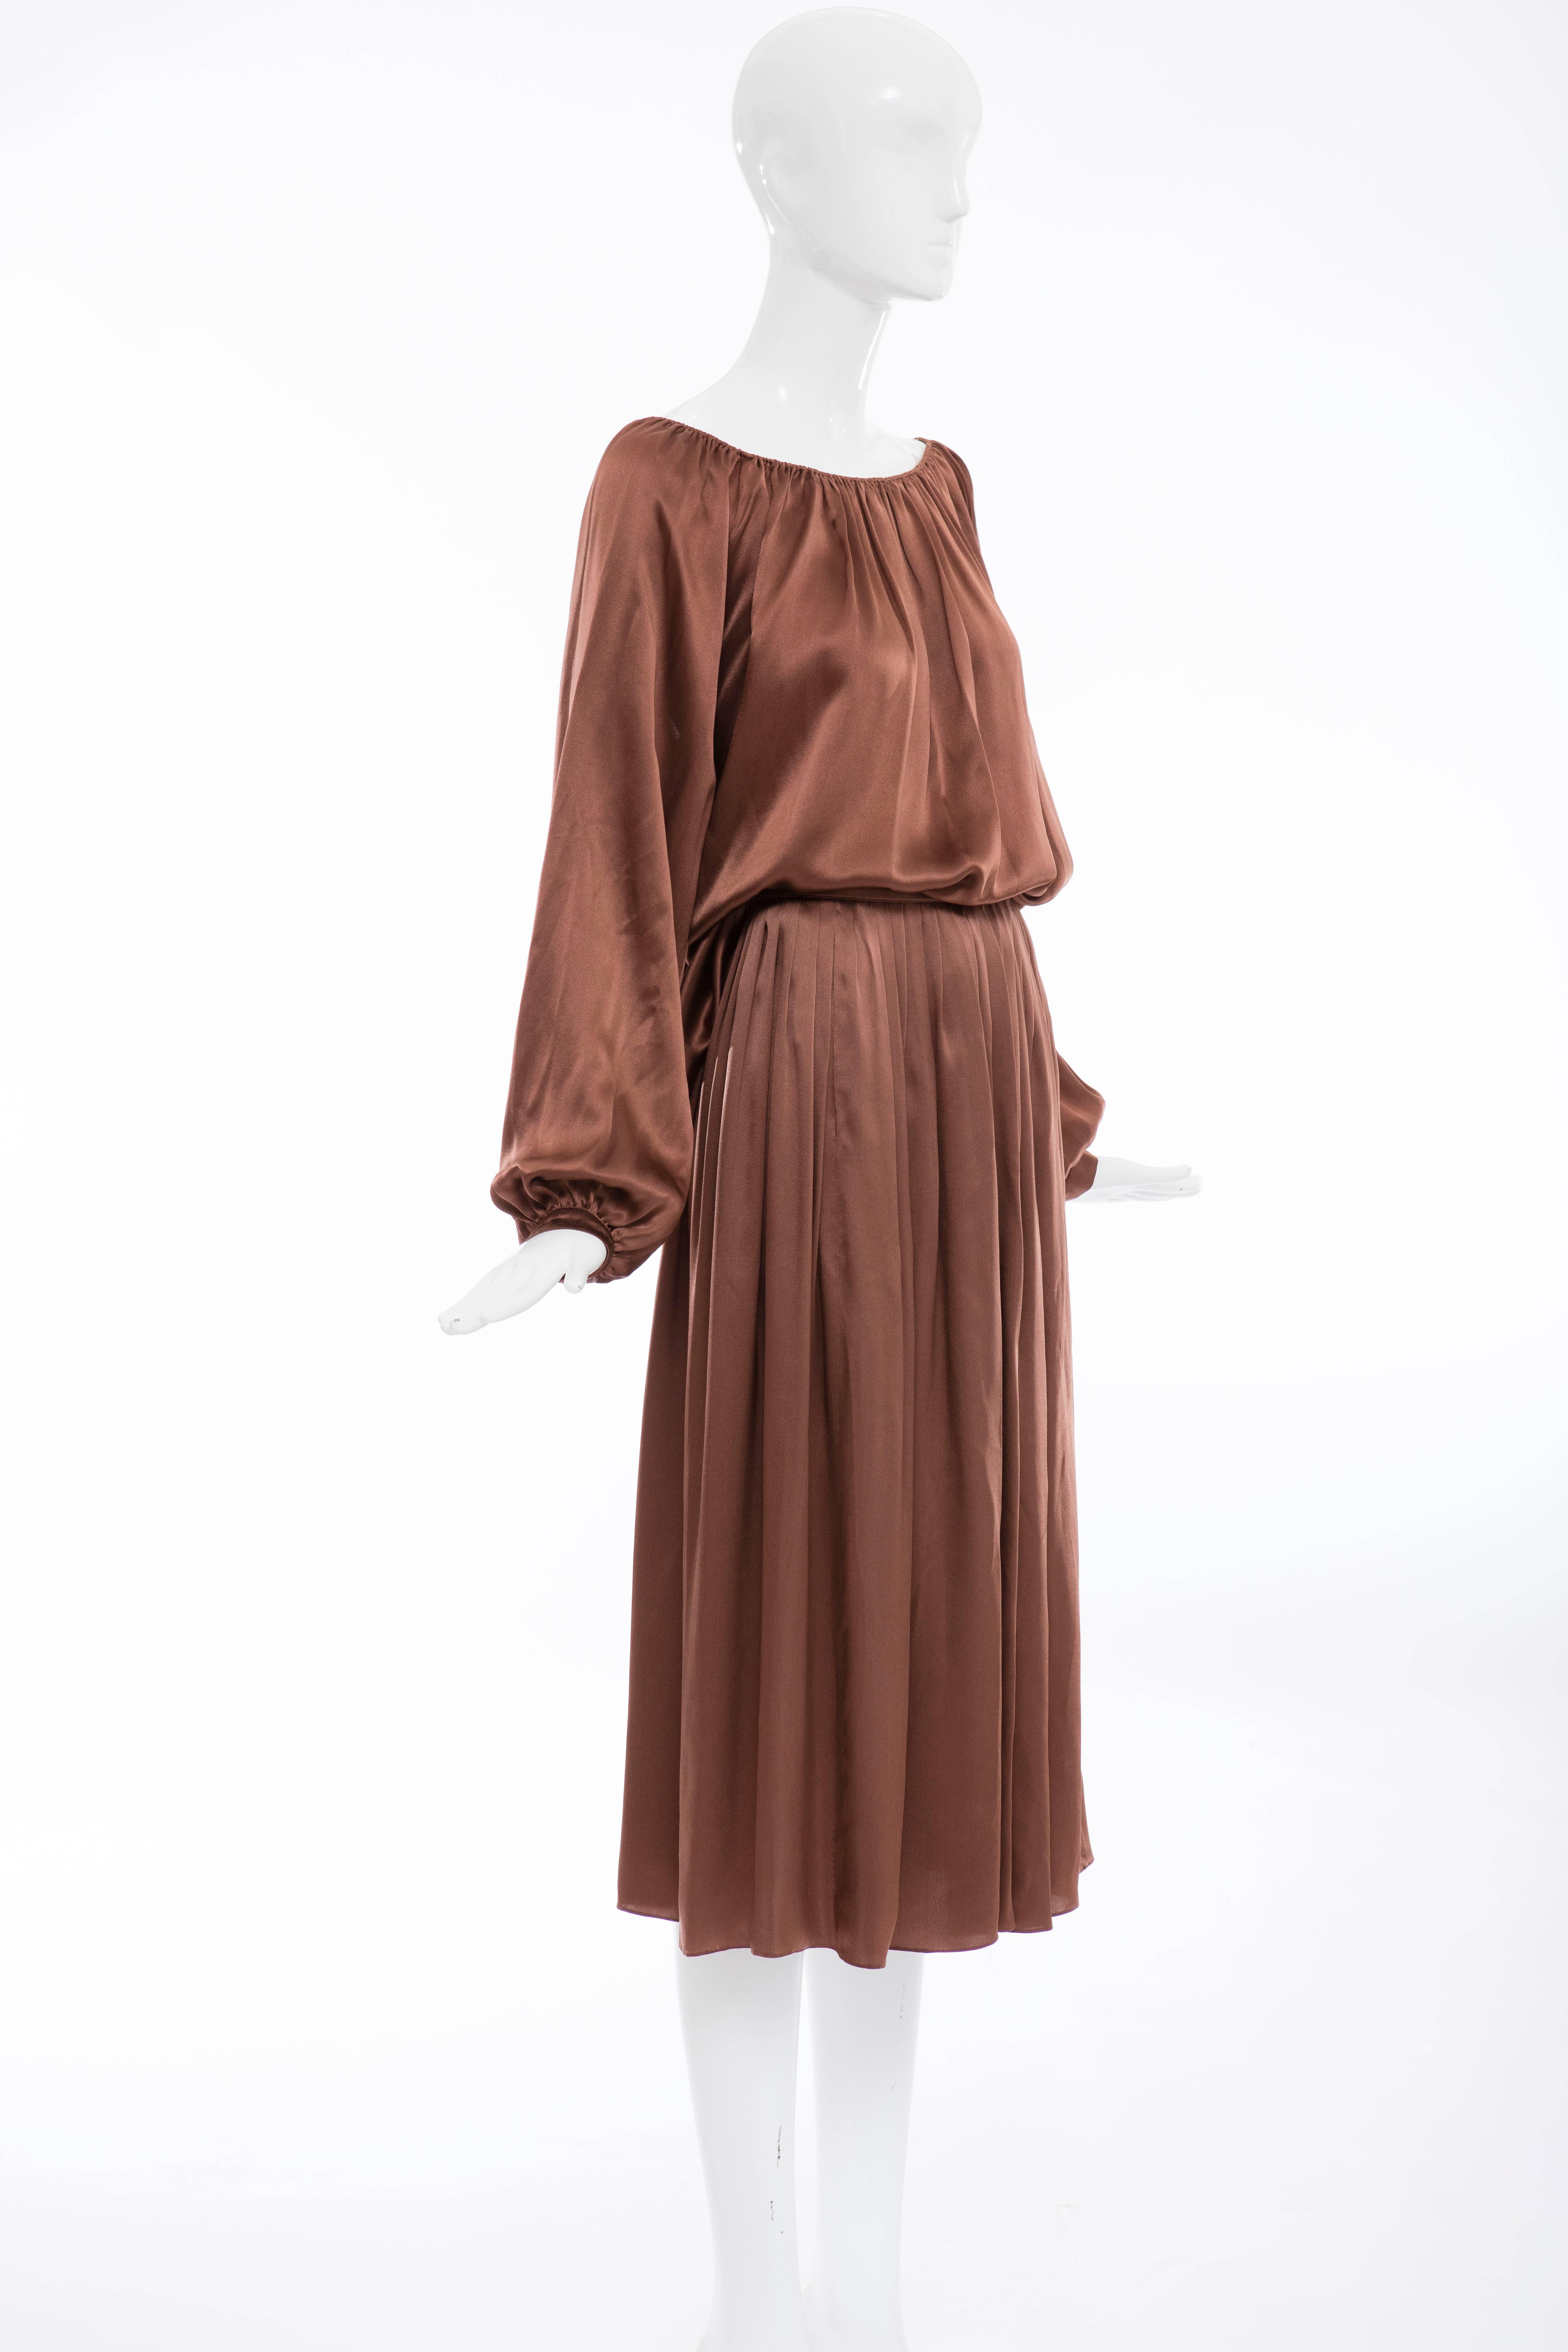 Women's Calvin Klein Chocolate Brown Silk Charmeuse Skirt Suit, Circa 1970's For Sale